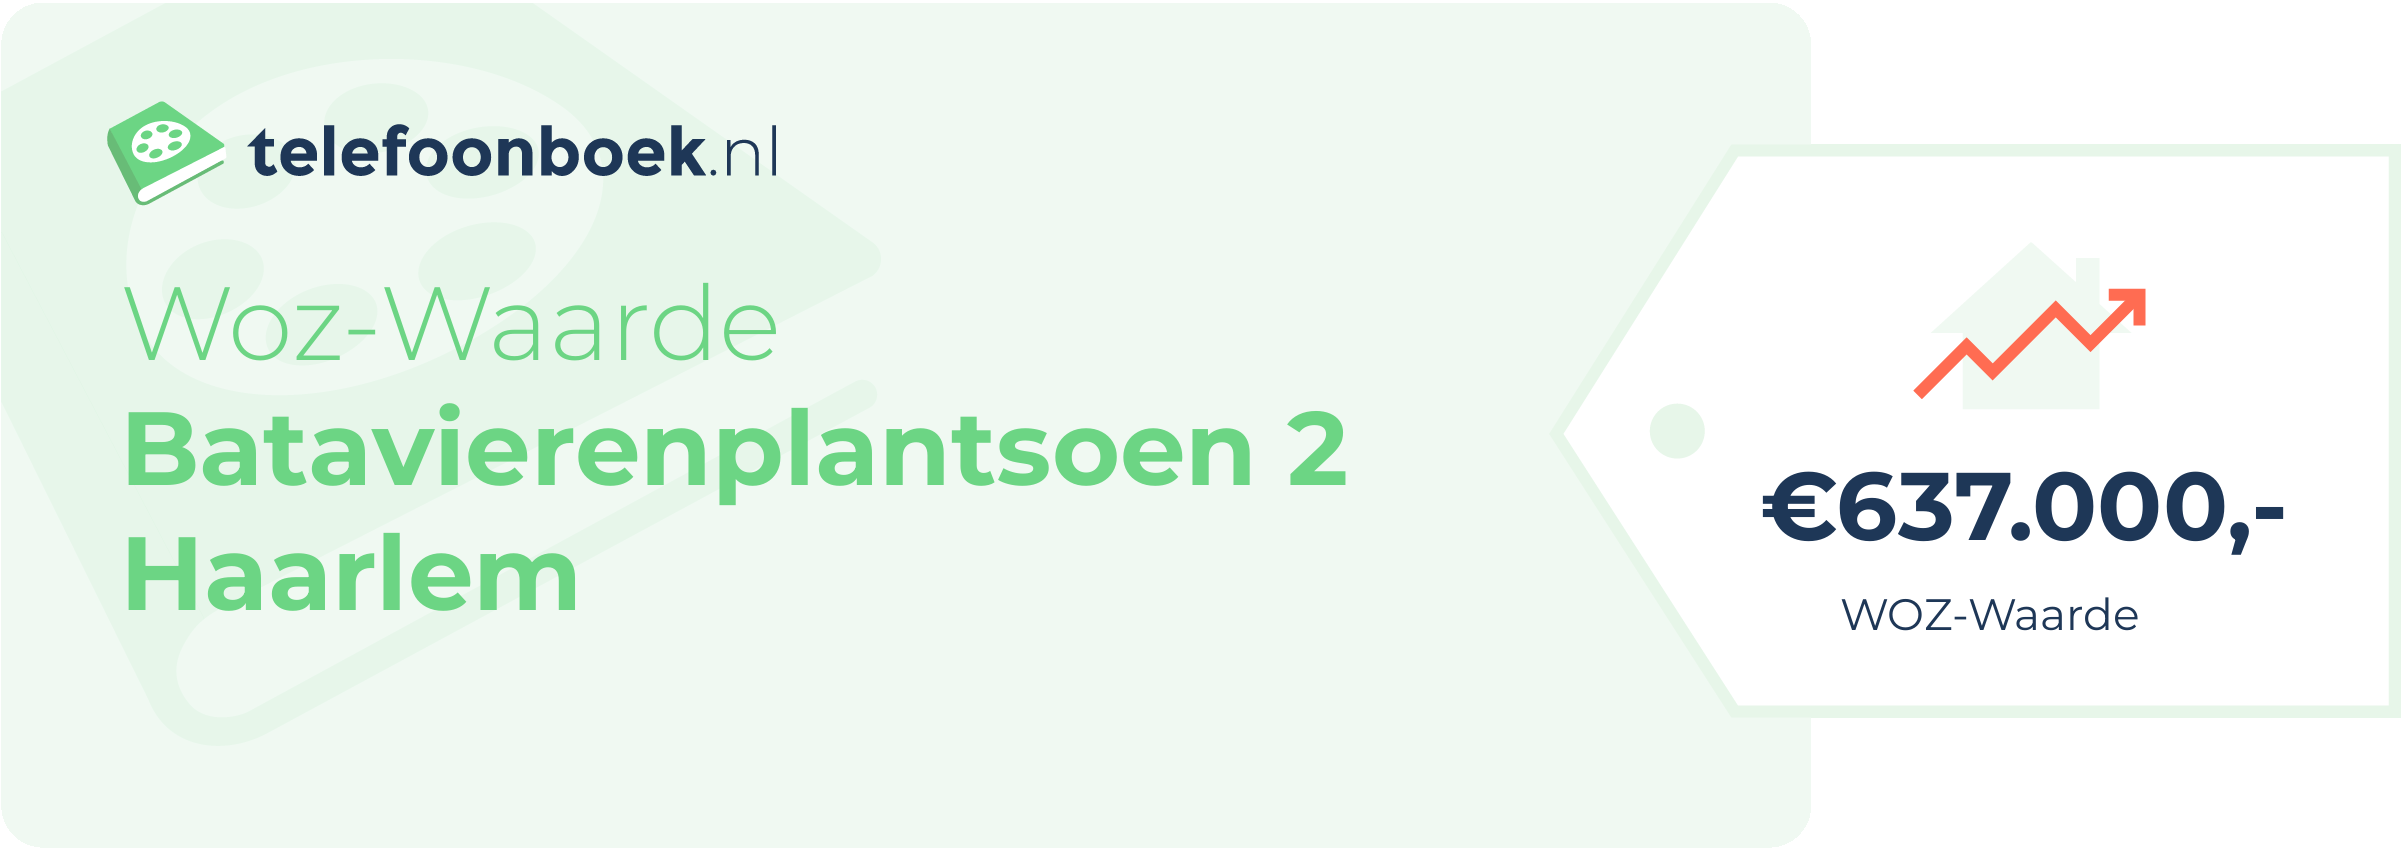 WOZ-waarde Batavierenplantsoen 2 Haarlem